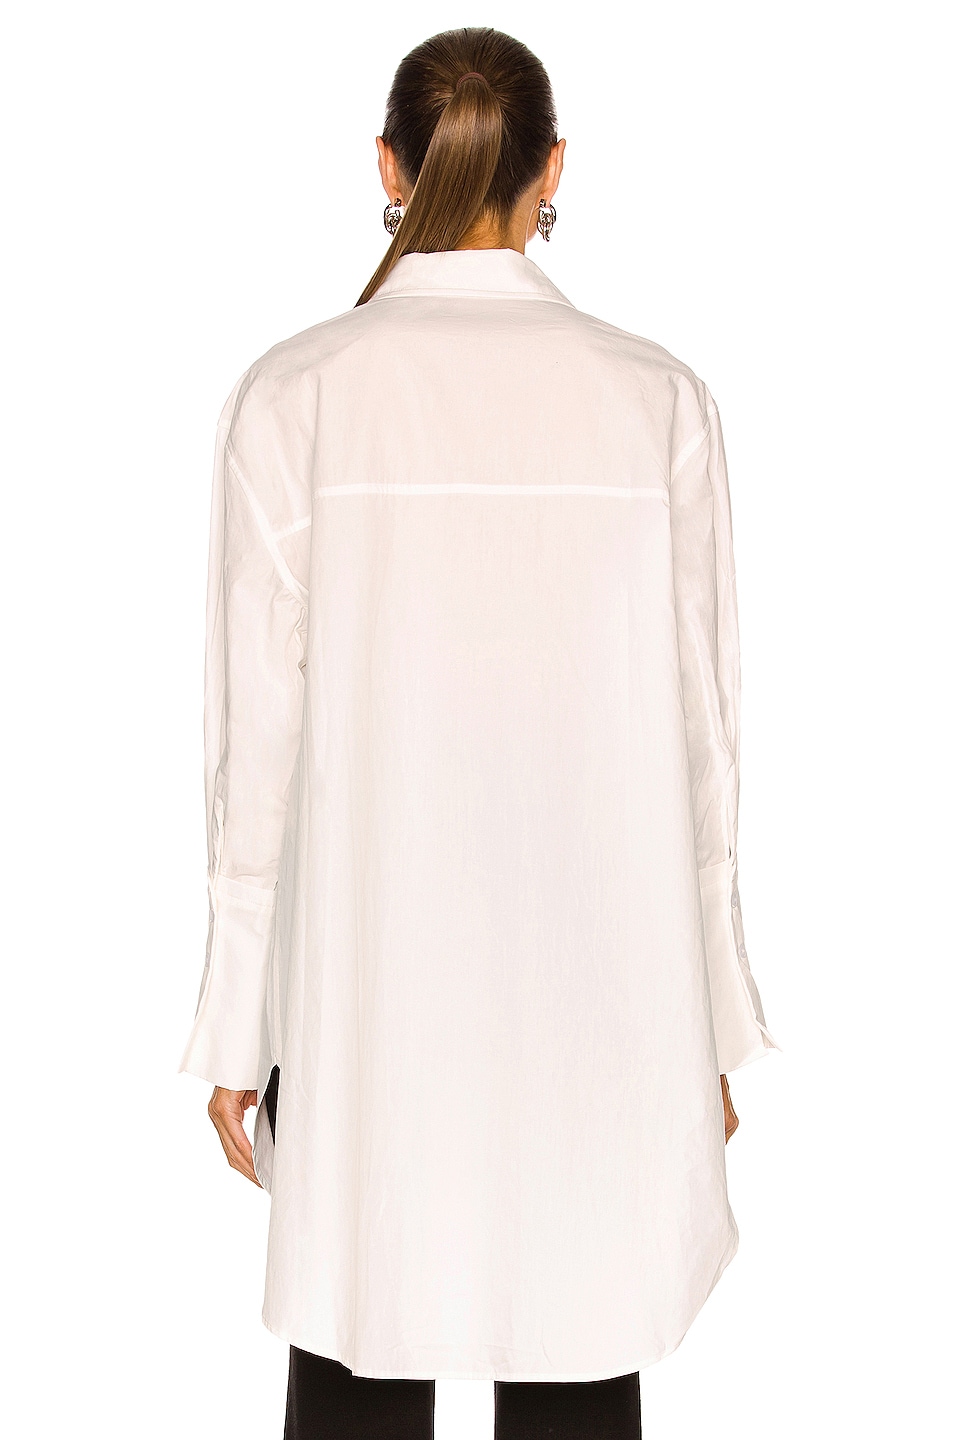 St. Agni Oversized Shirt in White | FWRD